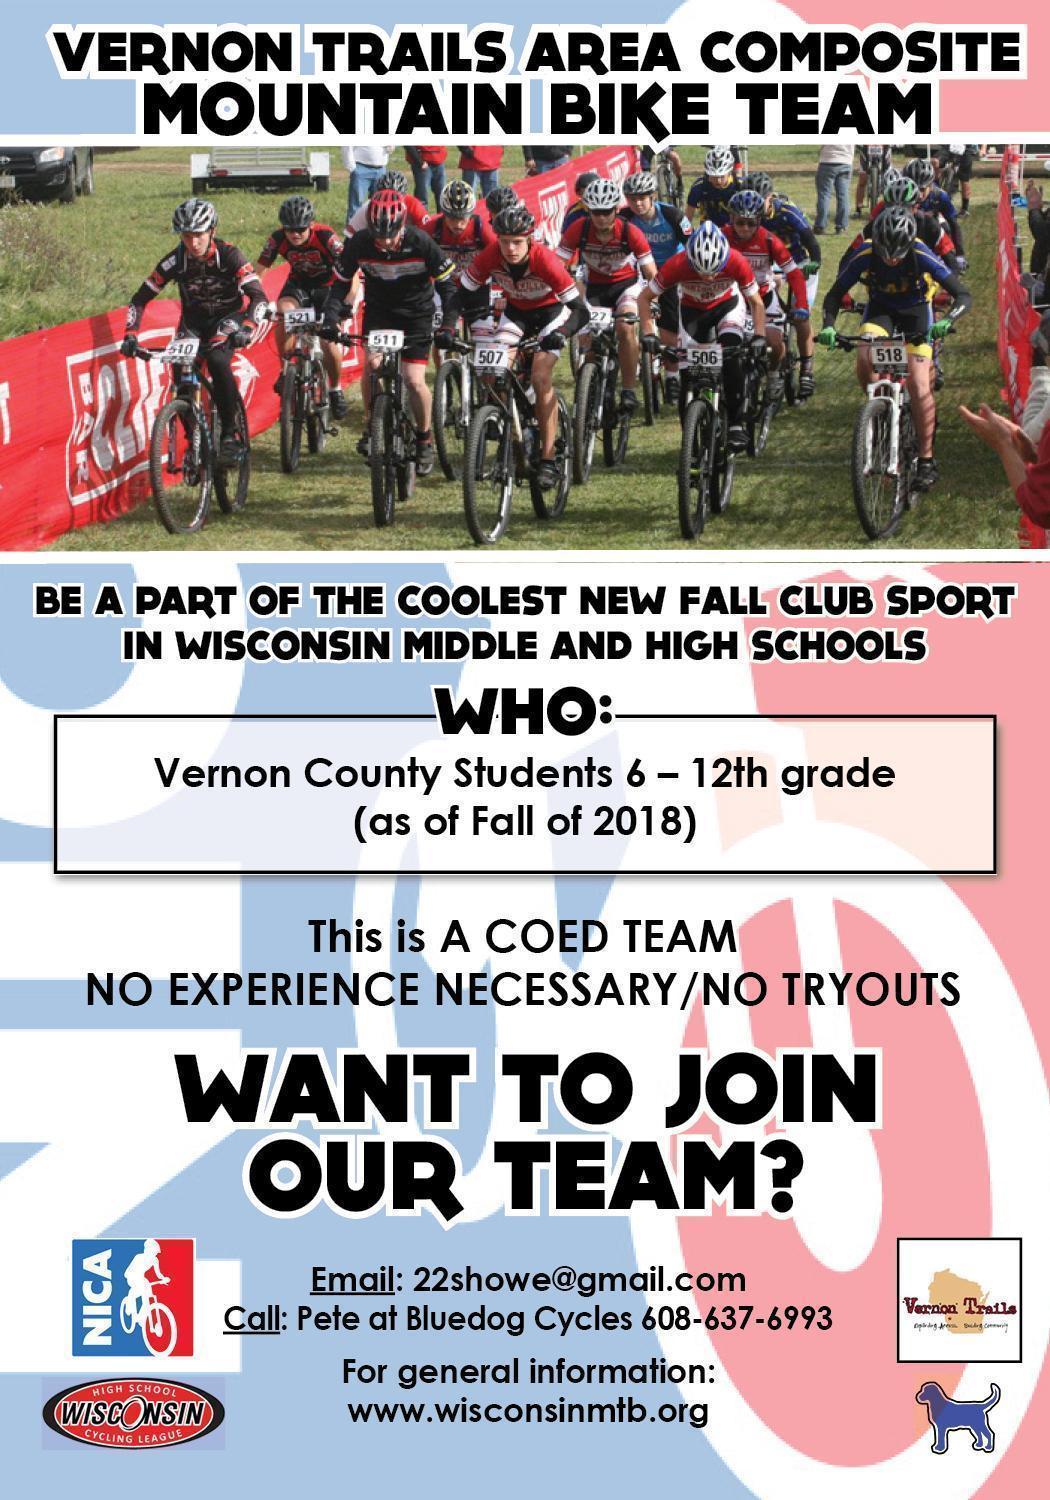 VTAC: Vernon Trails Area Composite Club